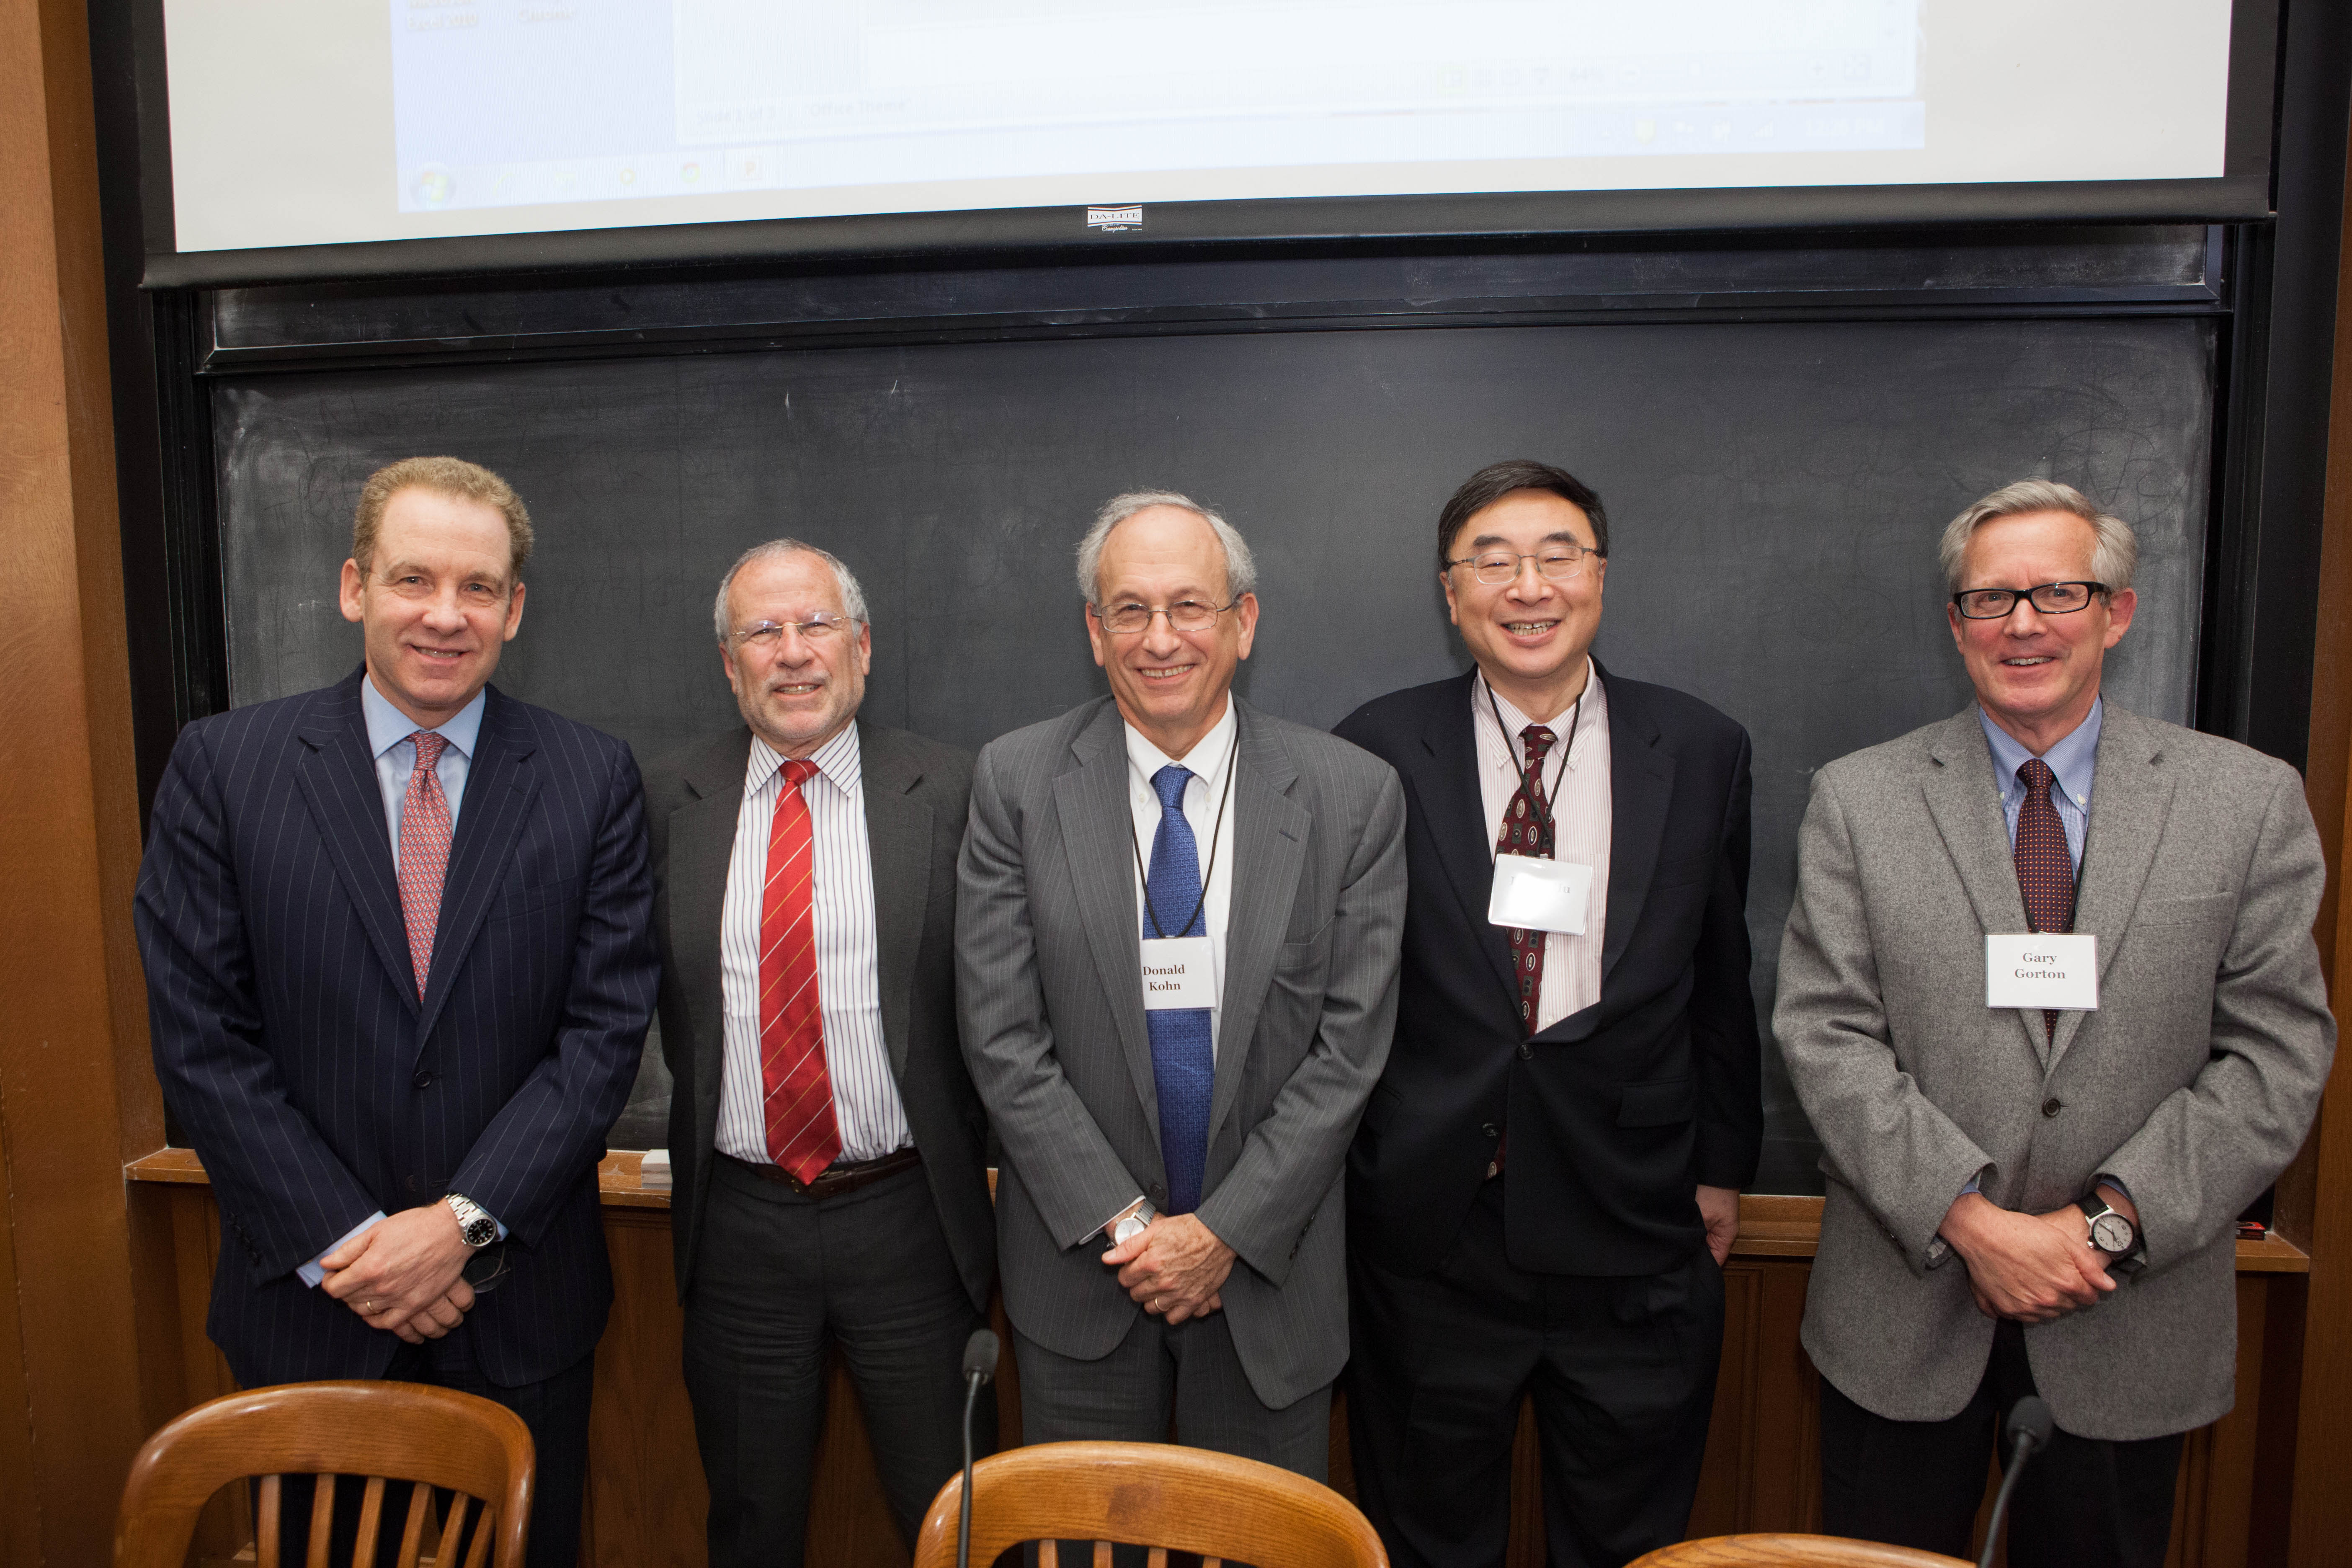 Robert J. Giuffra, Jr. ‘87, UVA Law Prof. Frederick Schauer, Donald Kohn, Texas Law Prof. Henry T. C. Hu ’79, and Yale SOM Prof. Gary B. Gorton